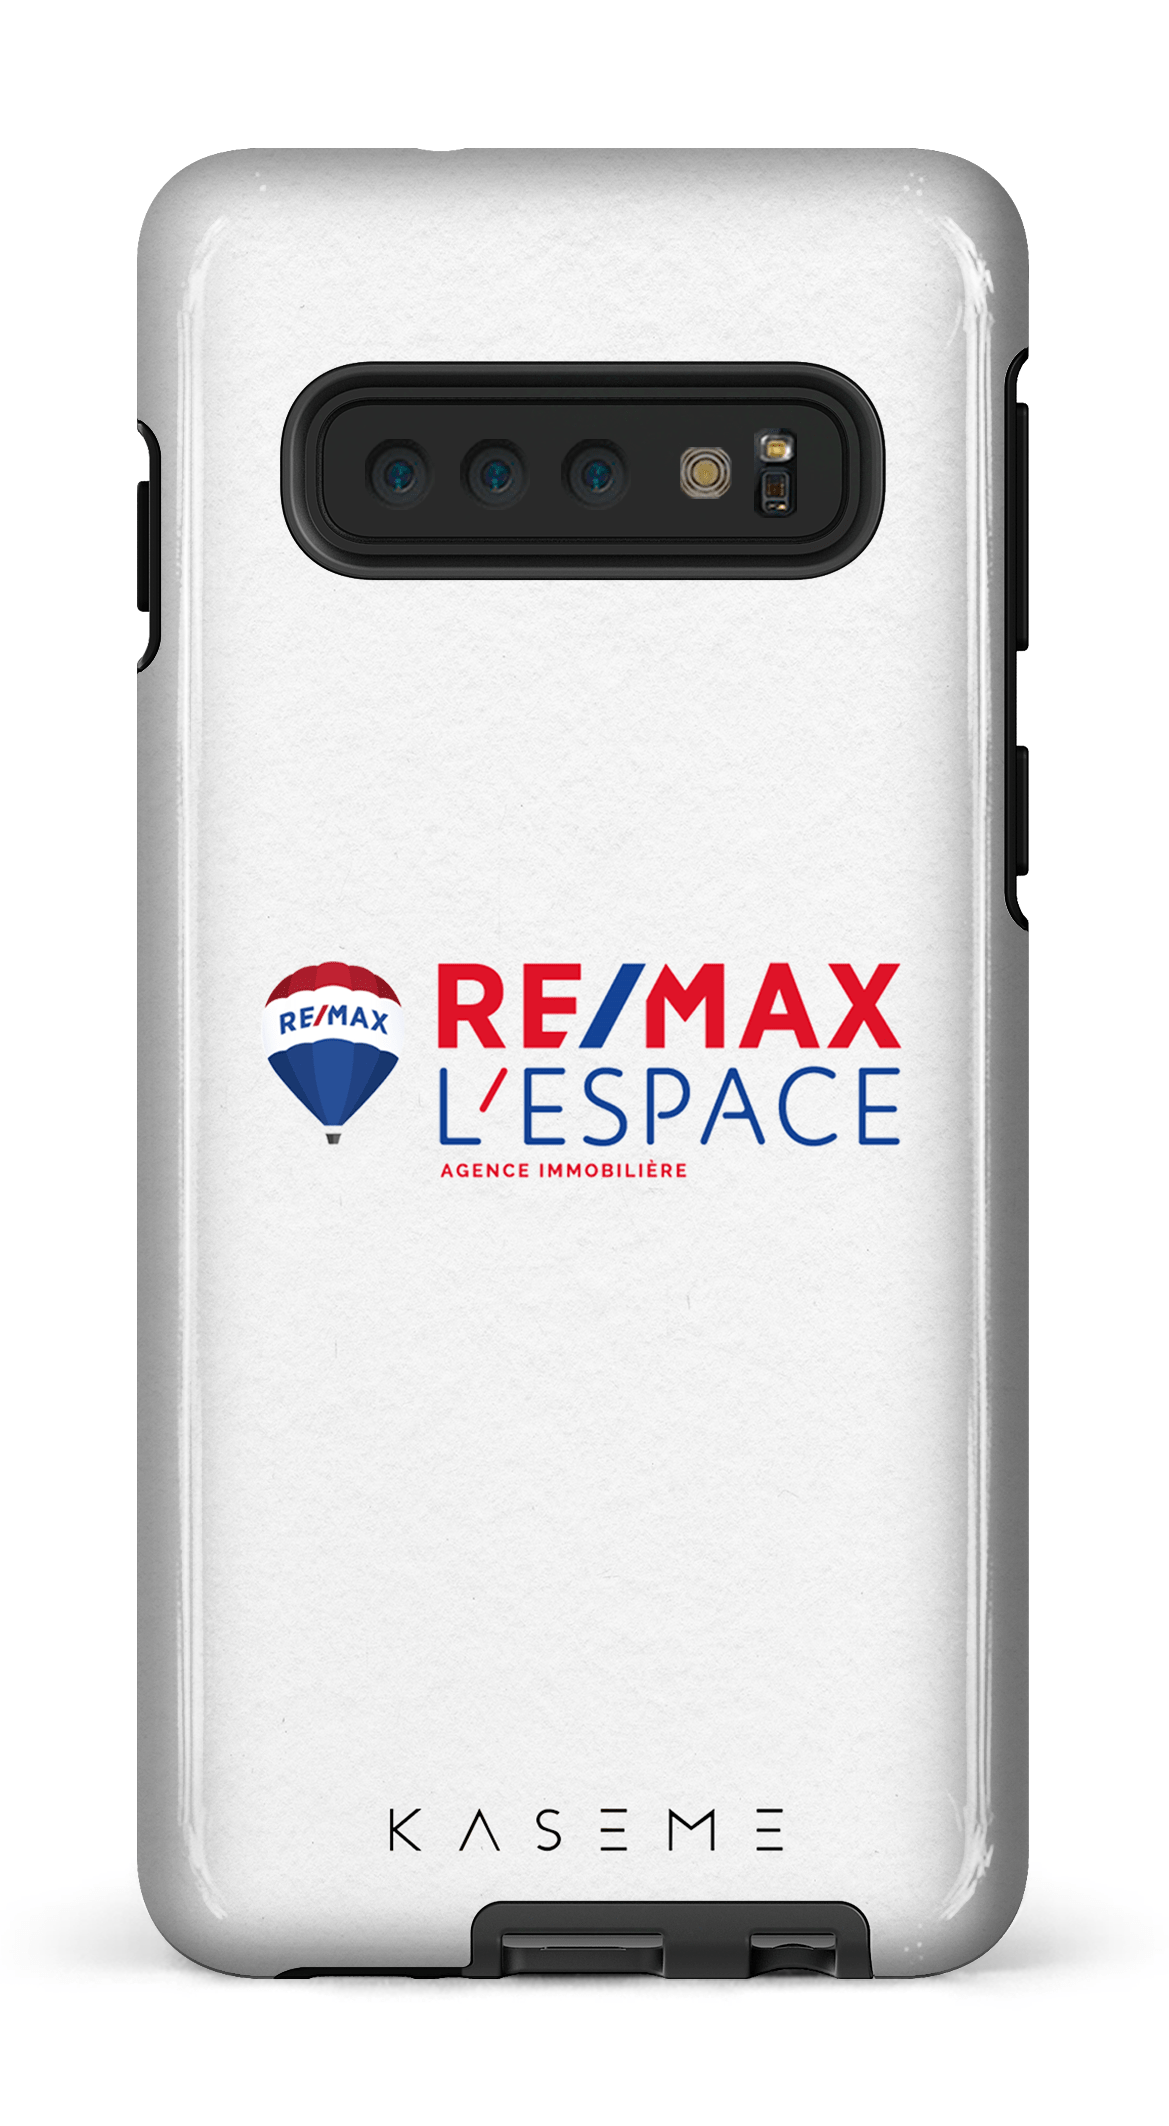 Remax L'Espace Blanc - Galaxy S10